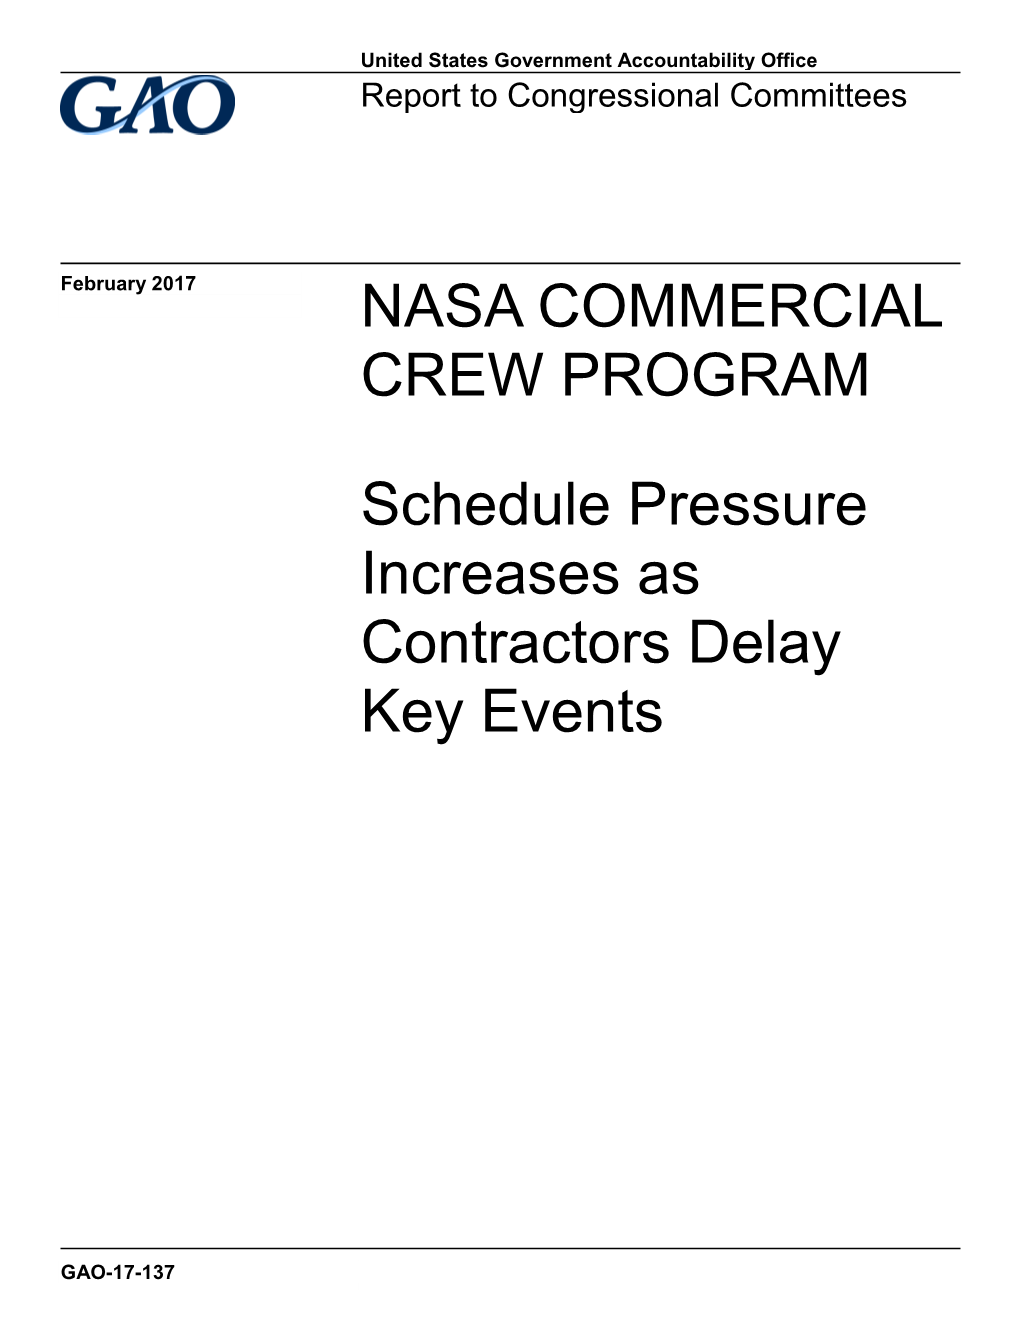 Gao-17-137, Nasa Commercial Crew Program